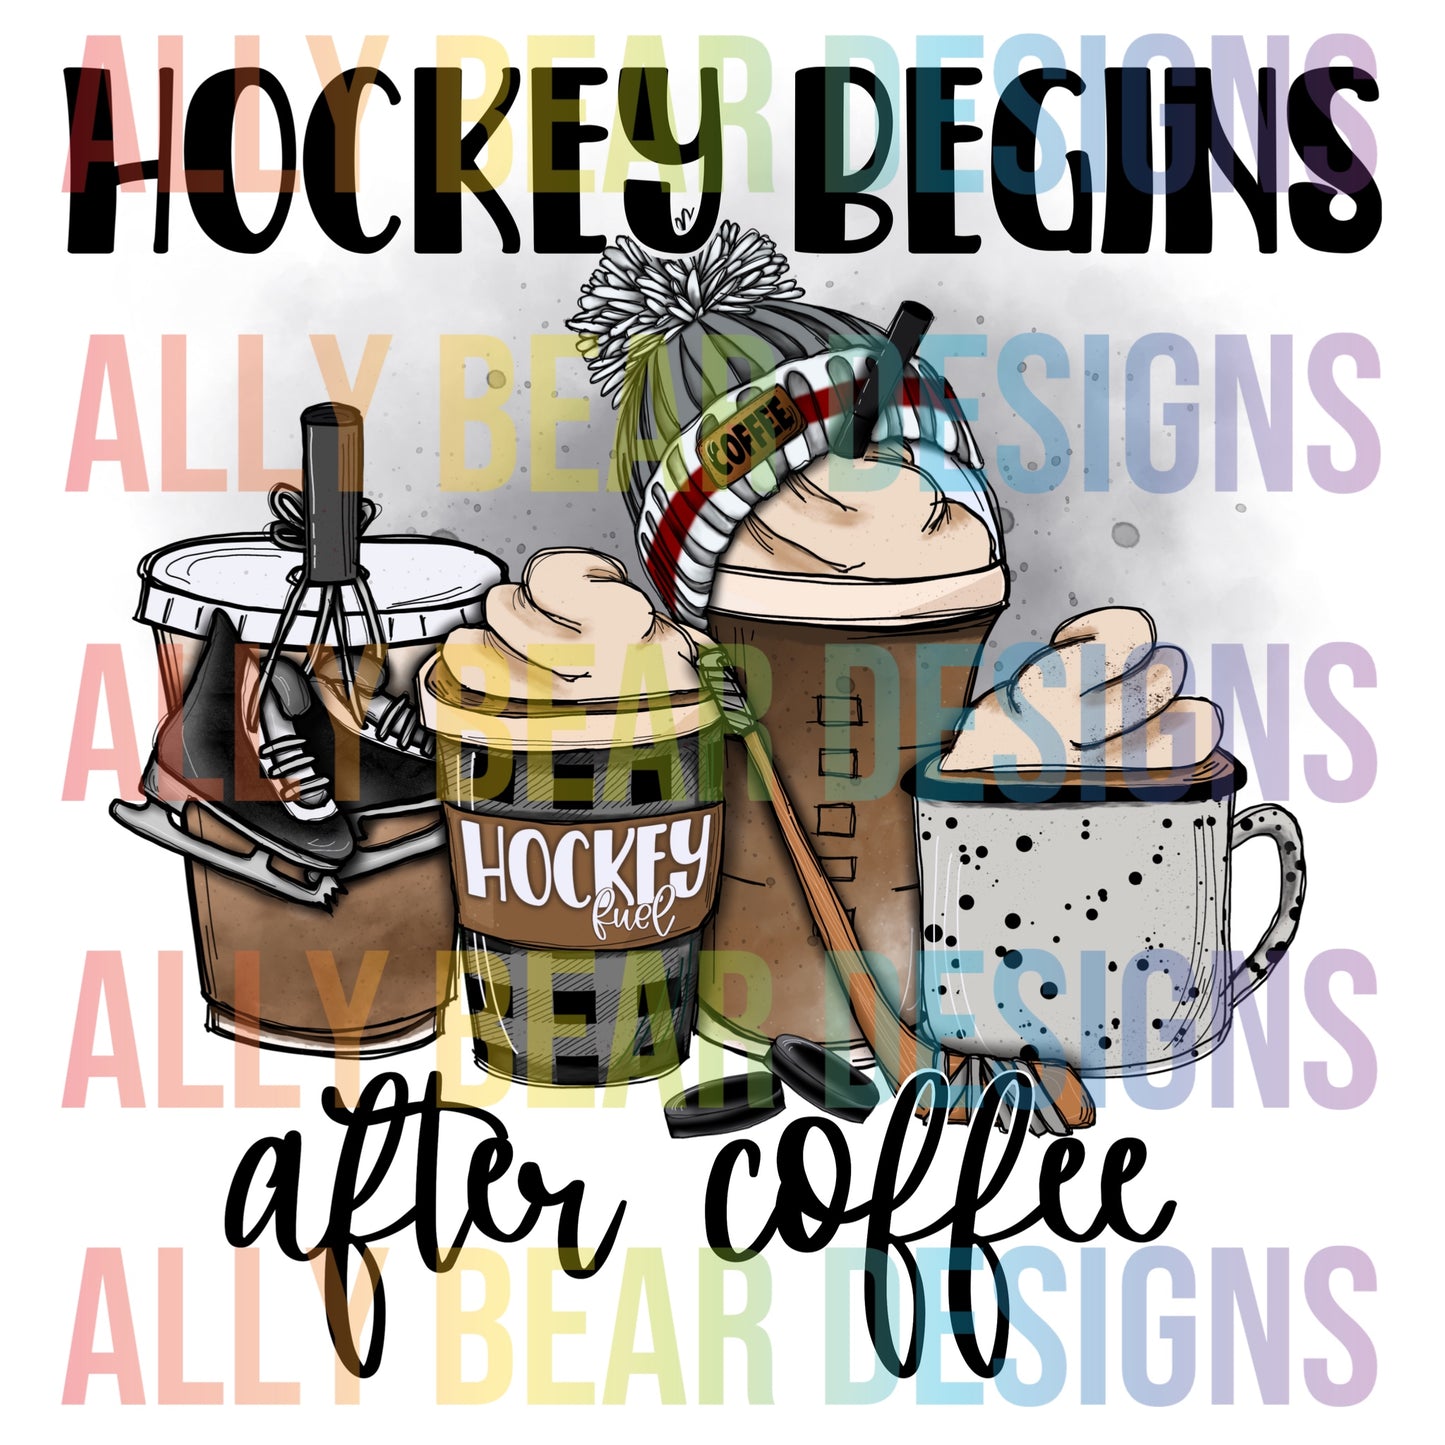 Hockey after Coffee